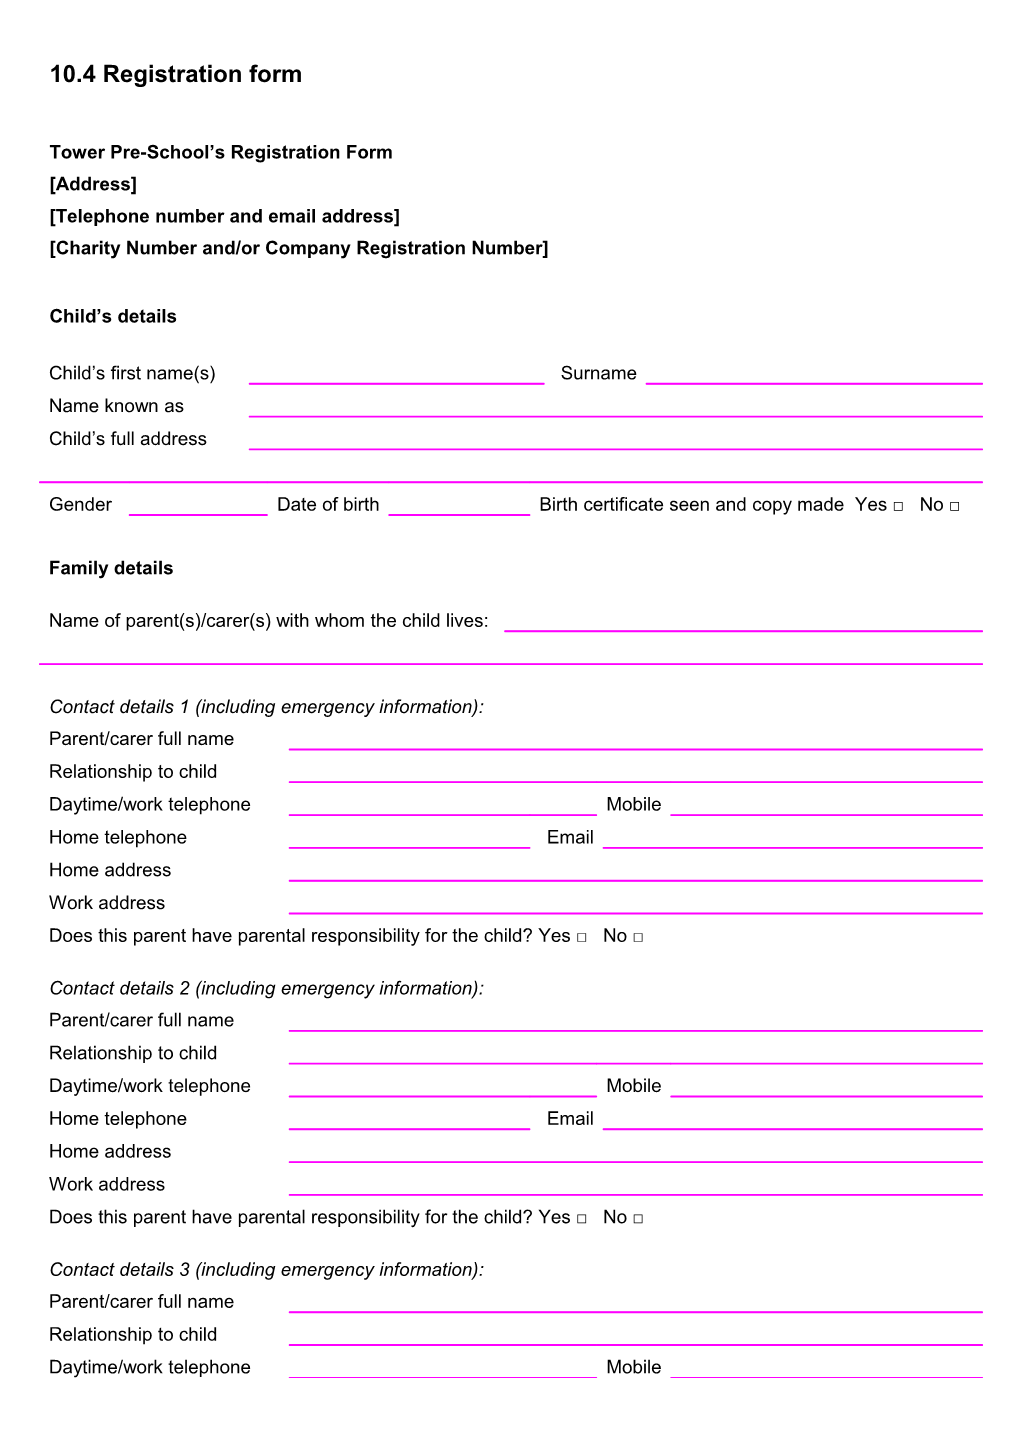 Tower Pre-School S Registration Form